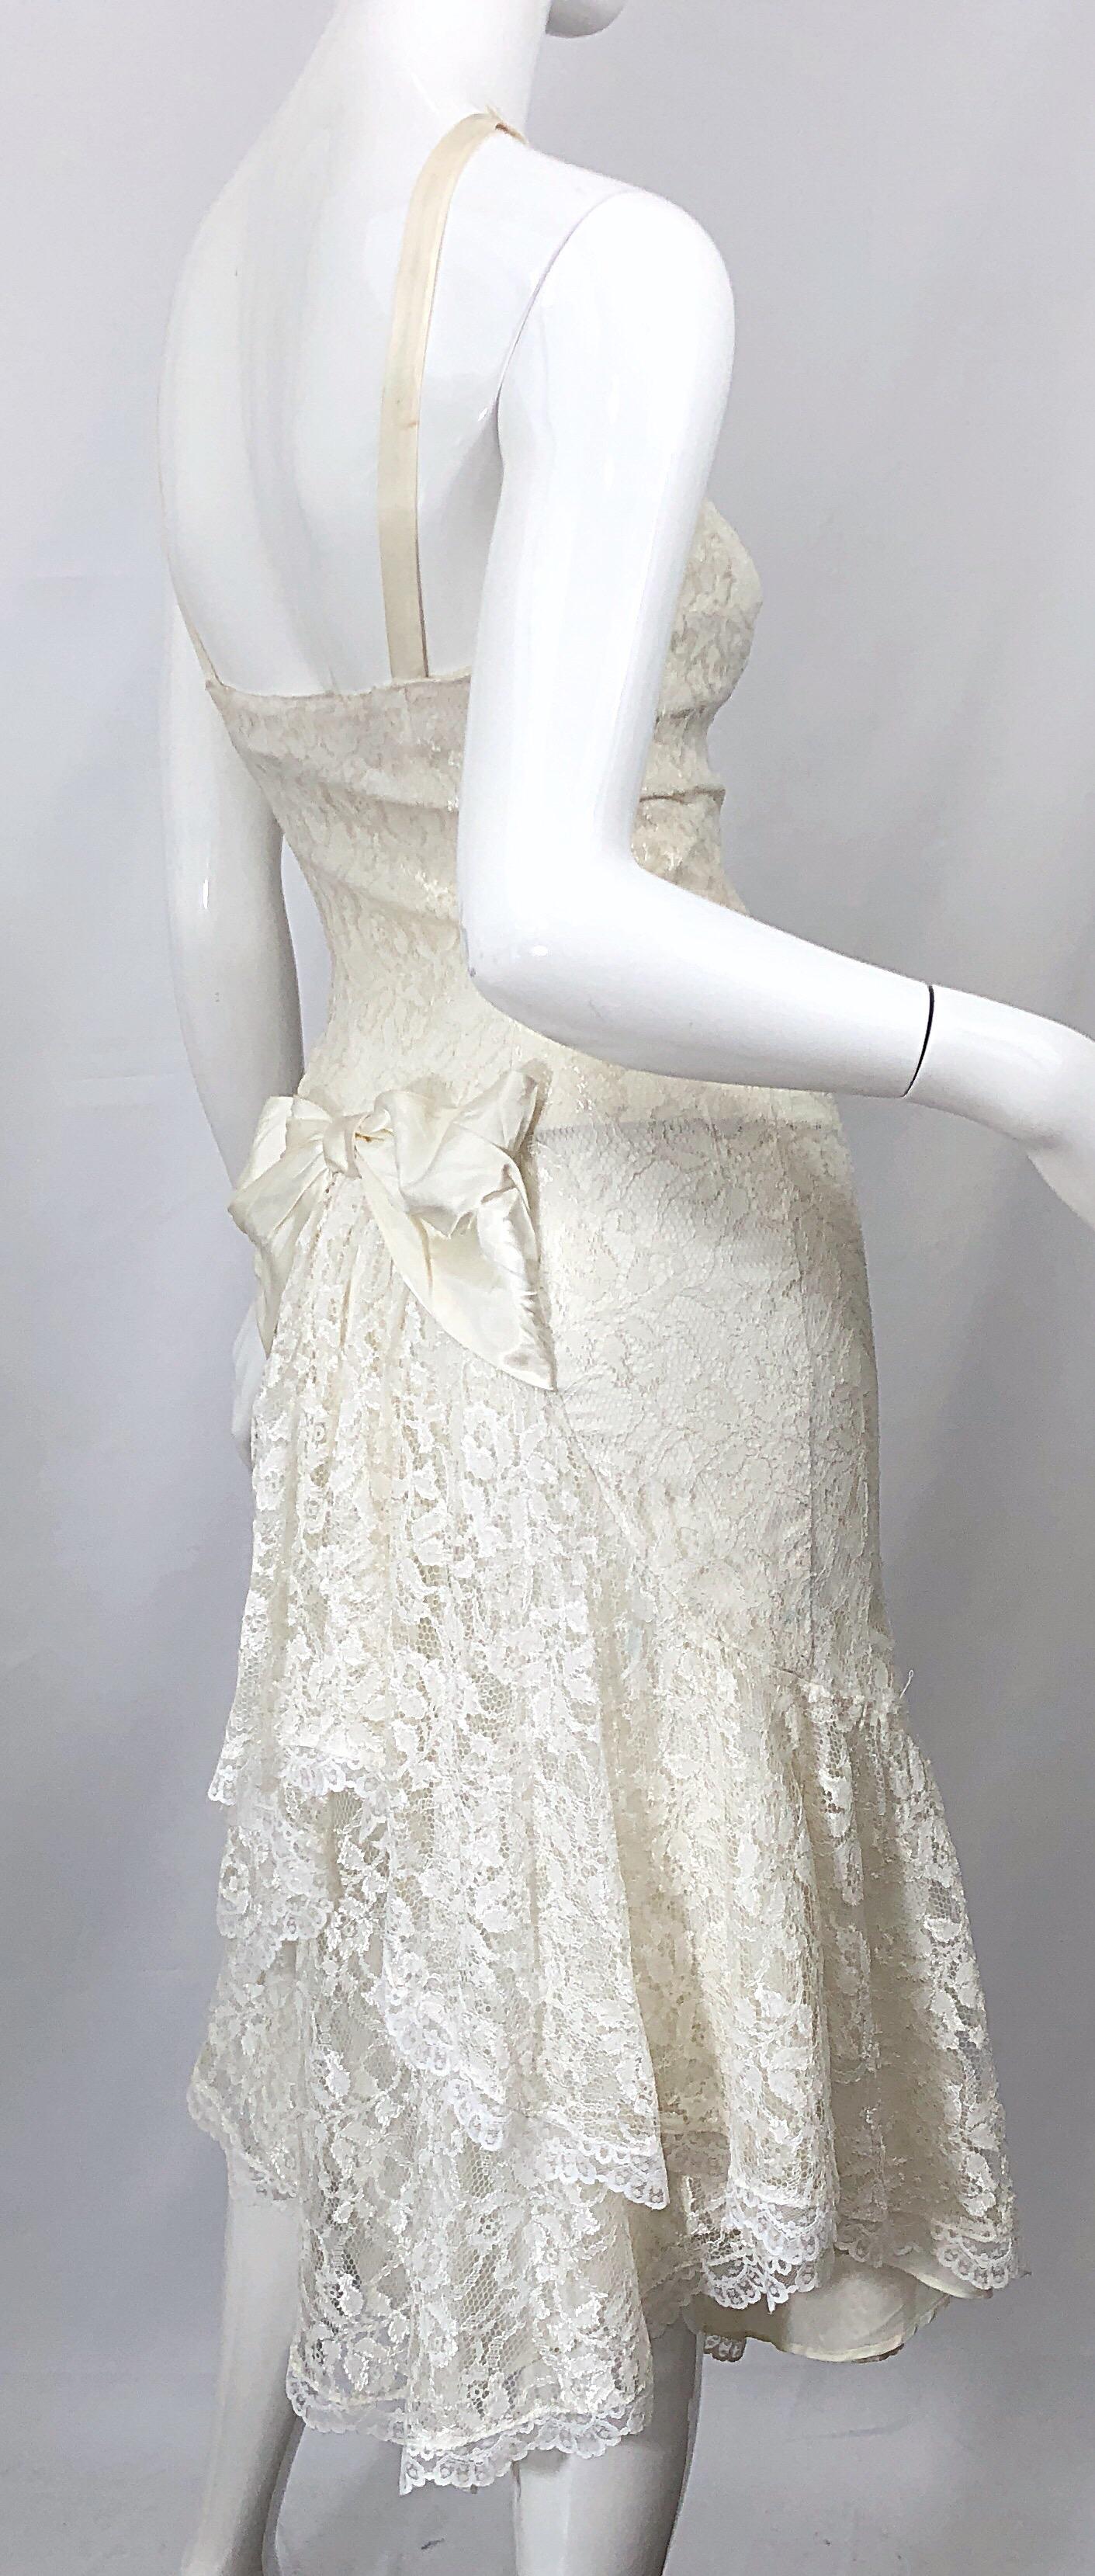 Women's 1980s Samir Ivory White Lace Handkerchief Hem Embroidered Vintage 80s Dress For Sale